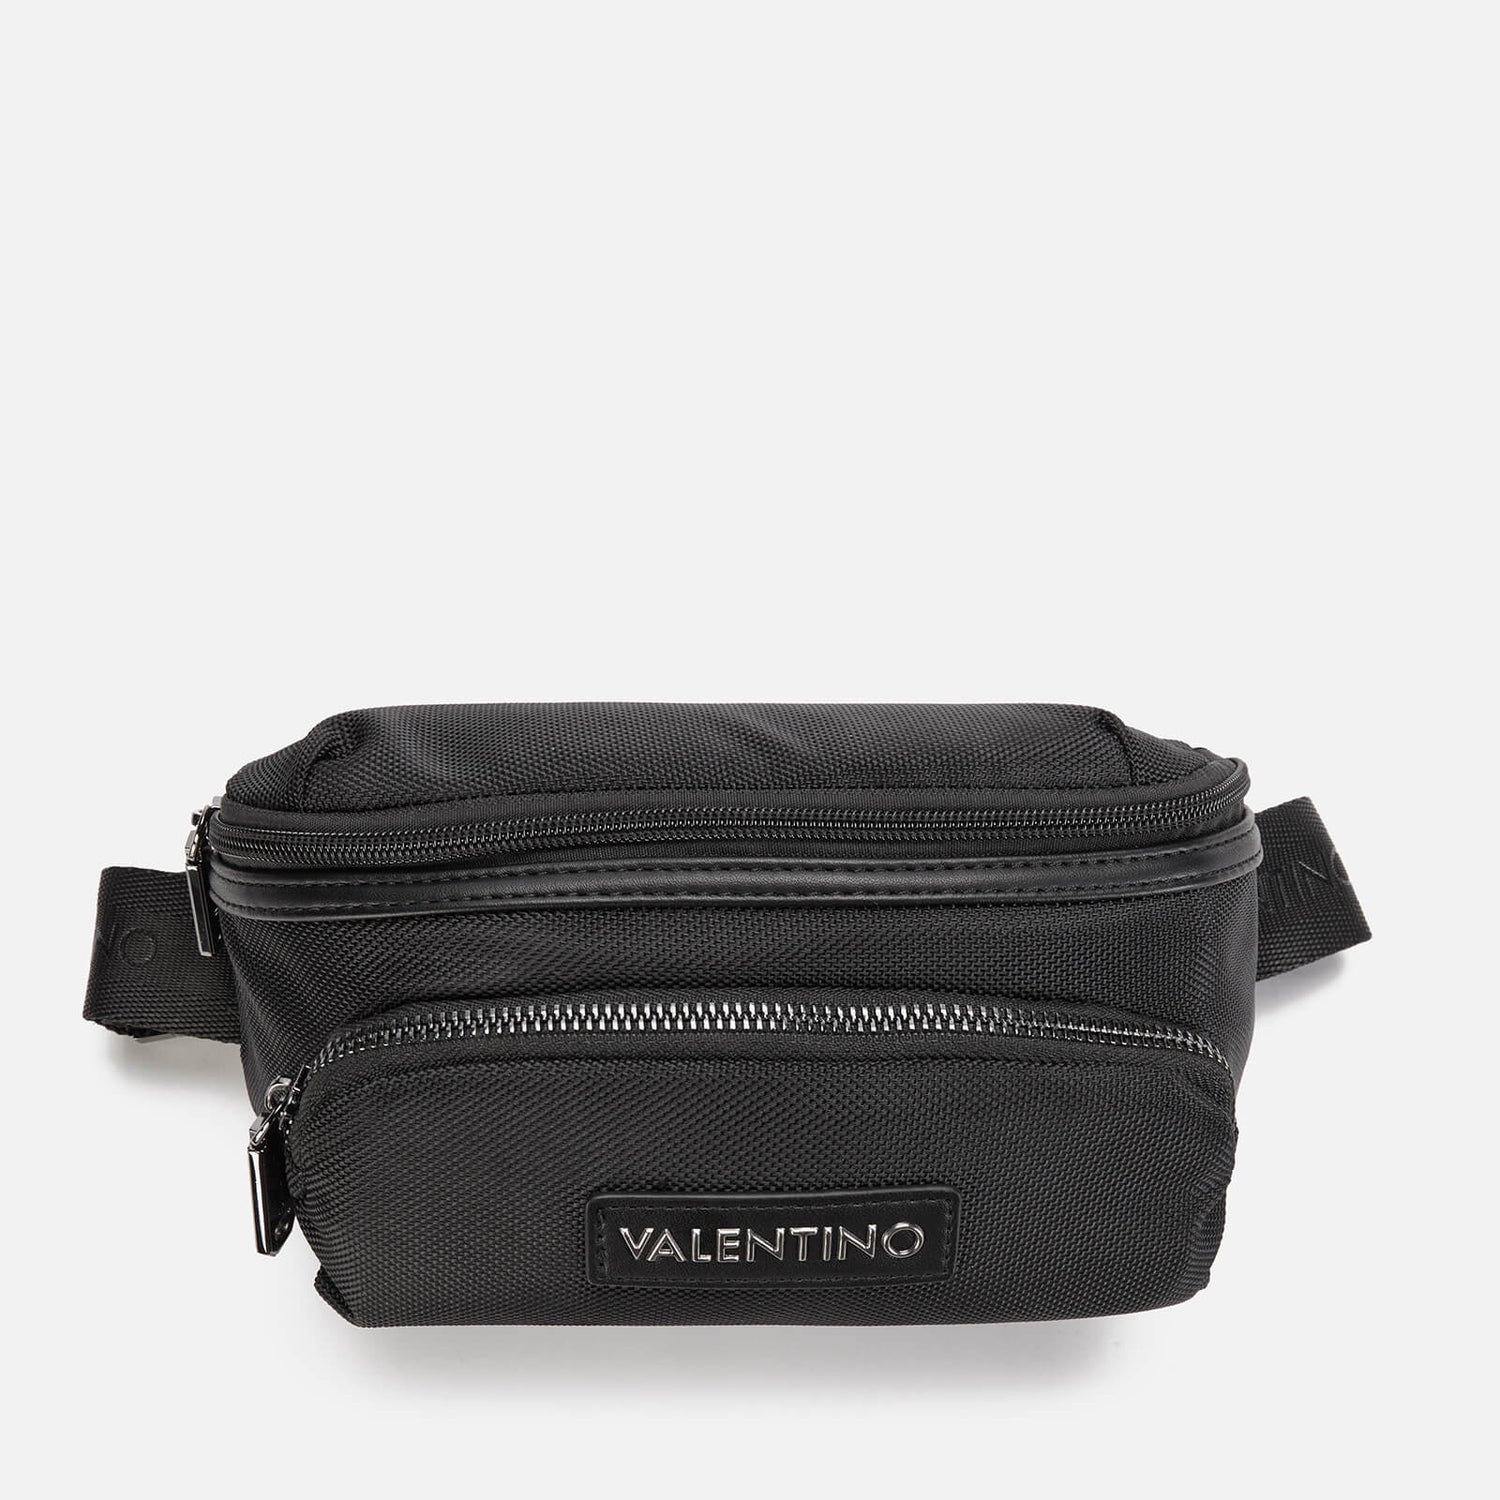 Valentino Men's Anakin Camera Bag - Black